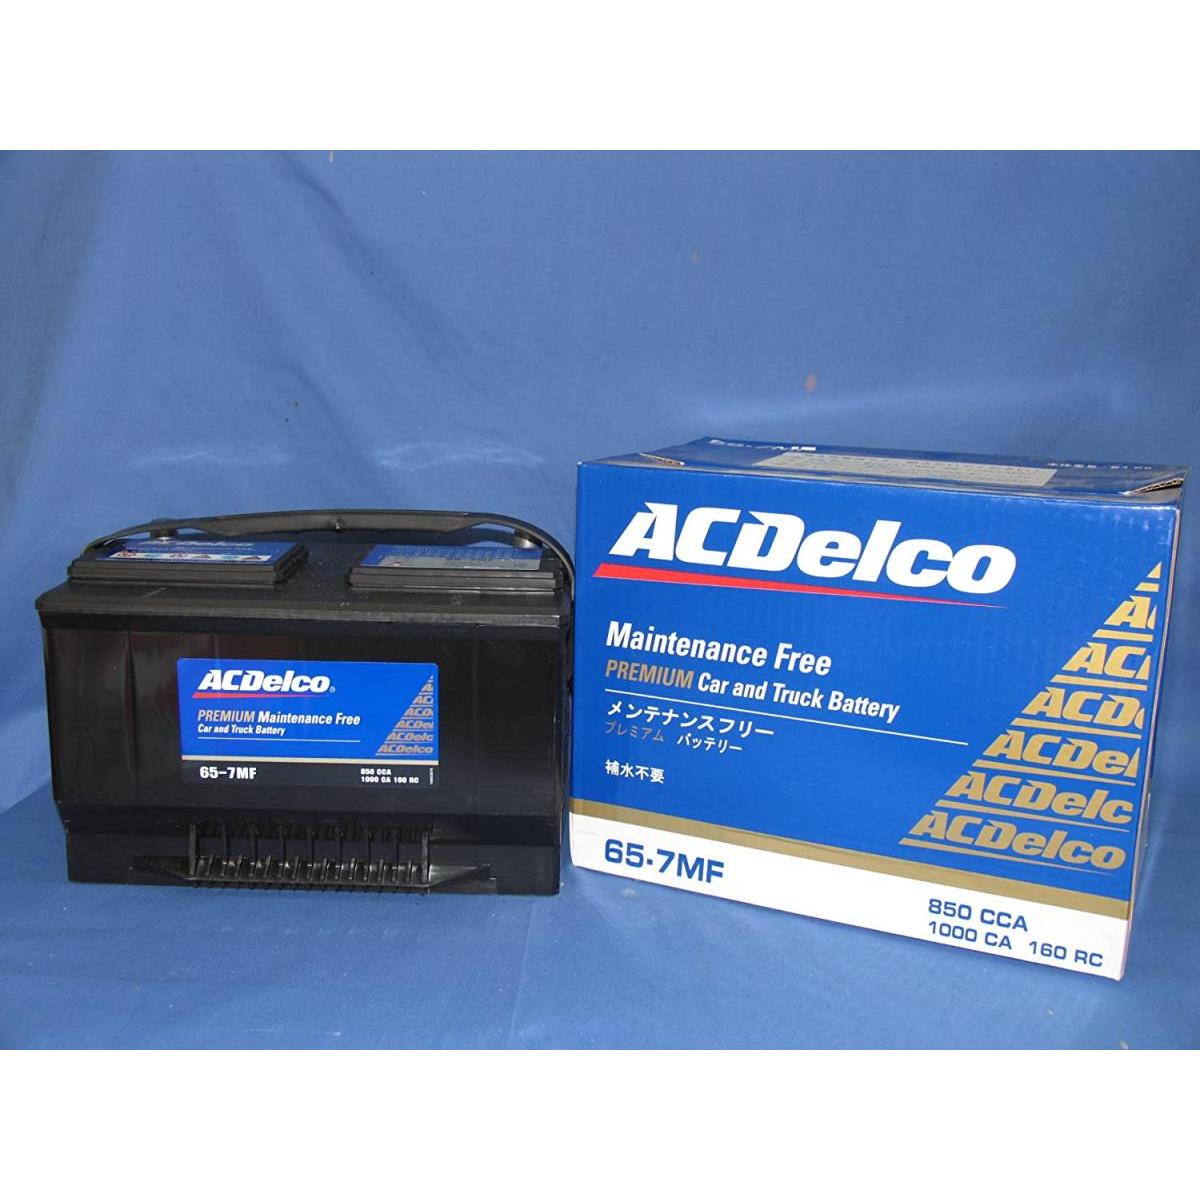 ACDelco 65-7MF ACデルコ ACDELCO 米国車用 メンテナンスフリーバッテリー